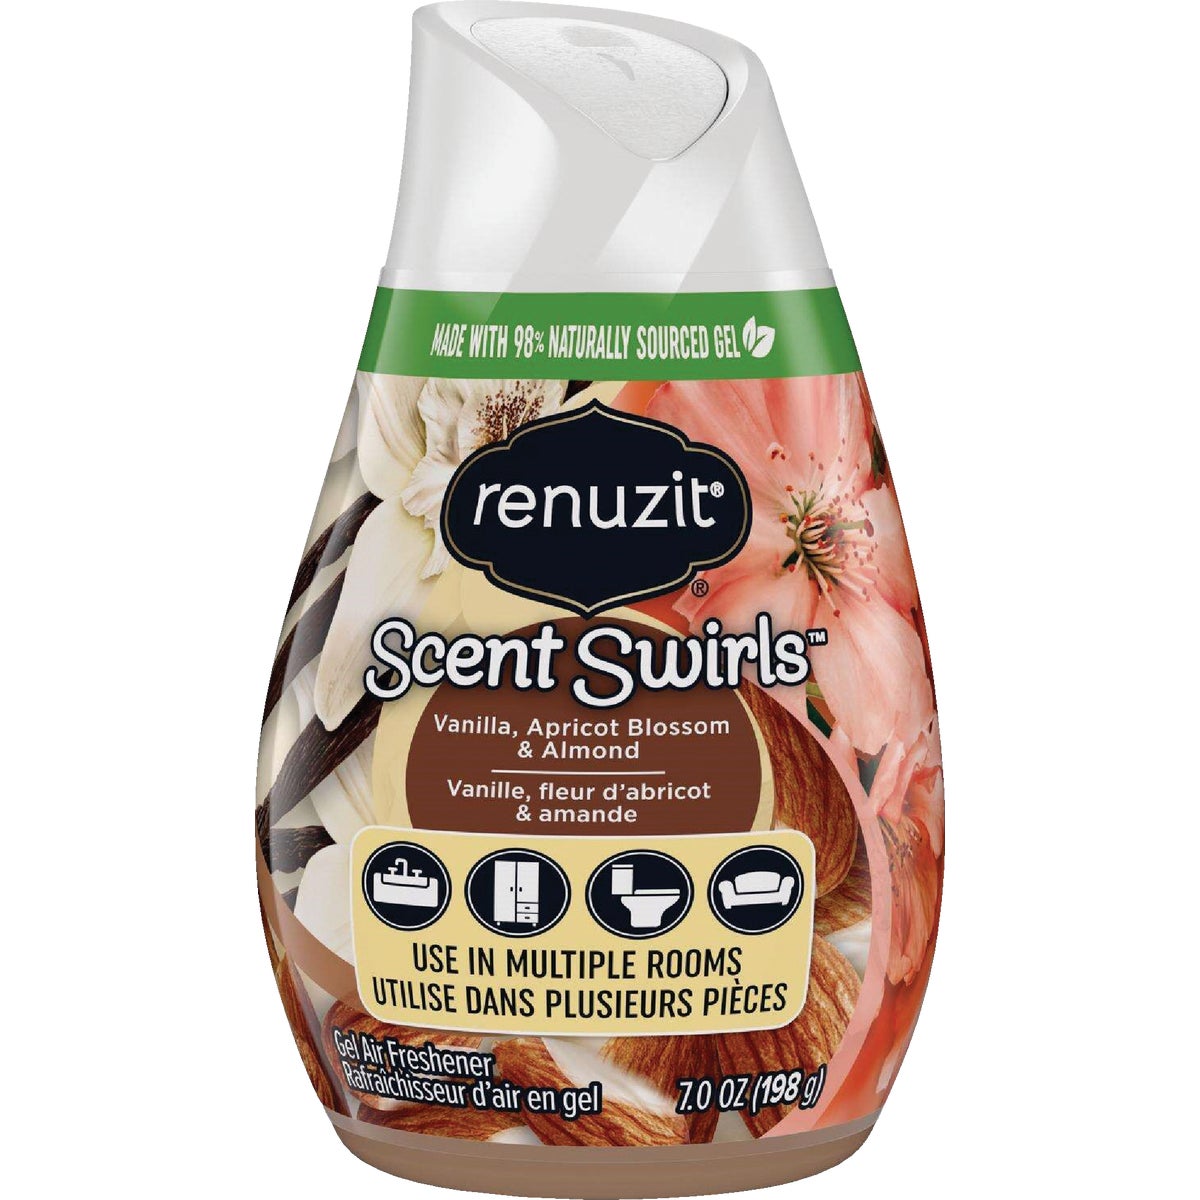 Renuzit Scent Swirls 7 Oz. Vanilla, Apricot Blossom & Almond Solid Air Freshener